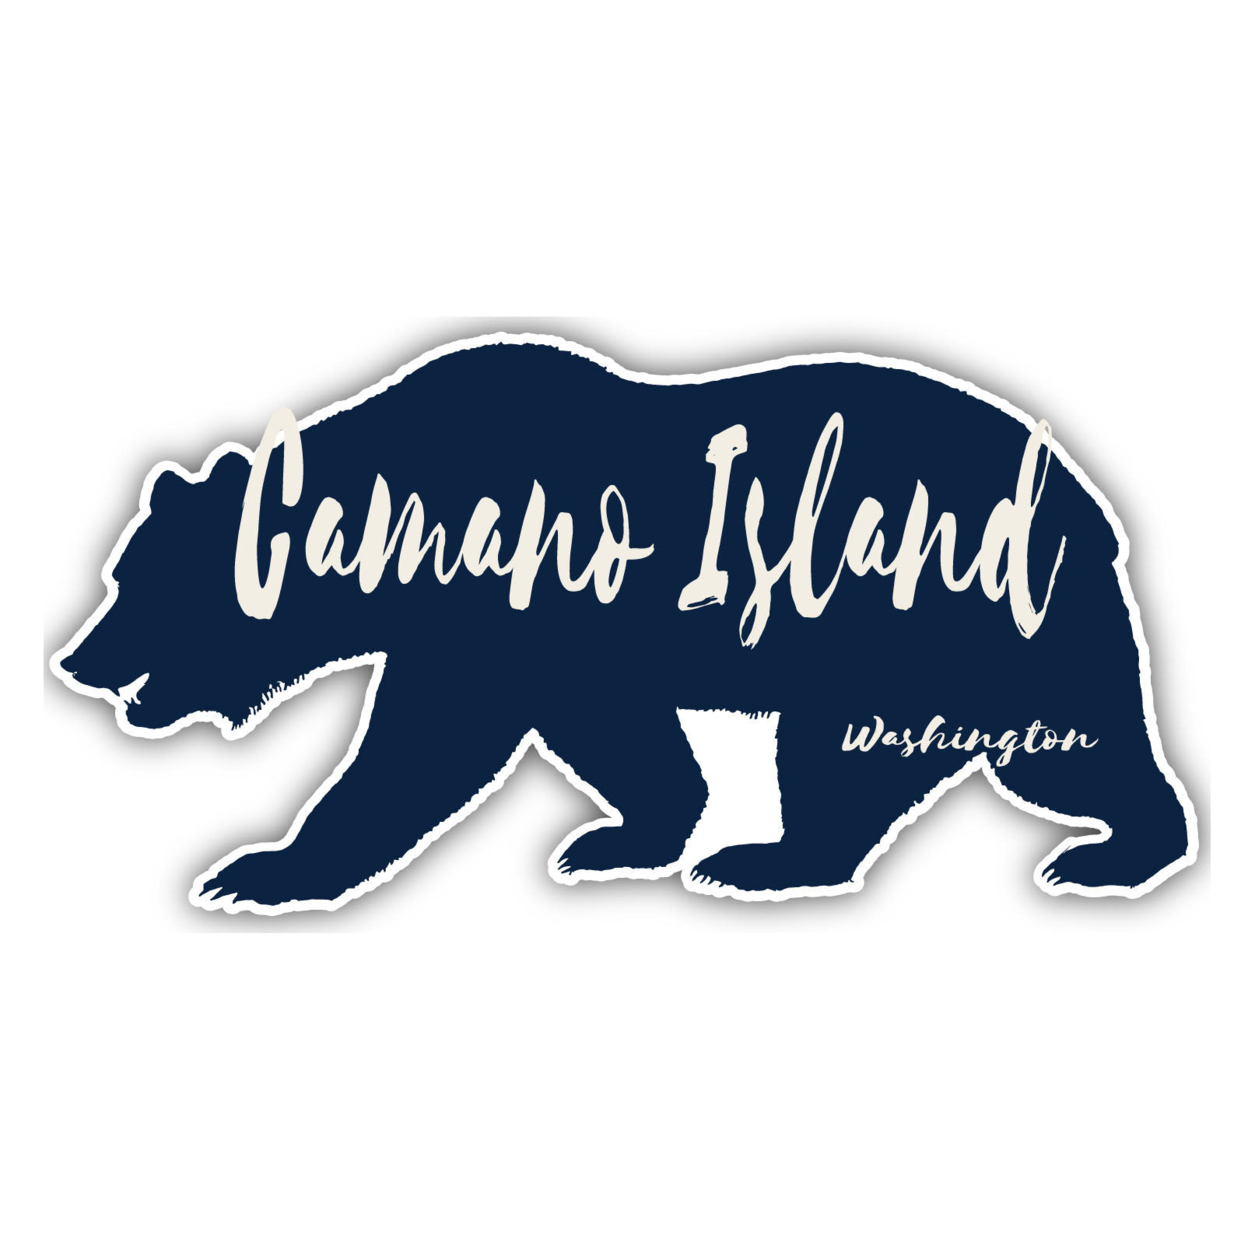 Camano Island Washington Souvenir Decorative Stickers (Choose Theme And Size) - Single Unit, 6-Inch, Tent